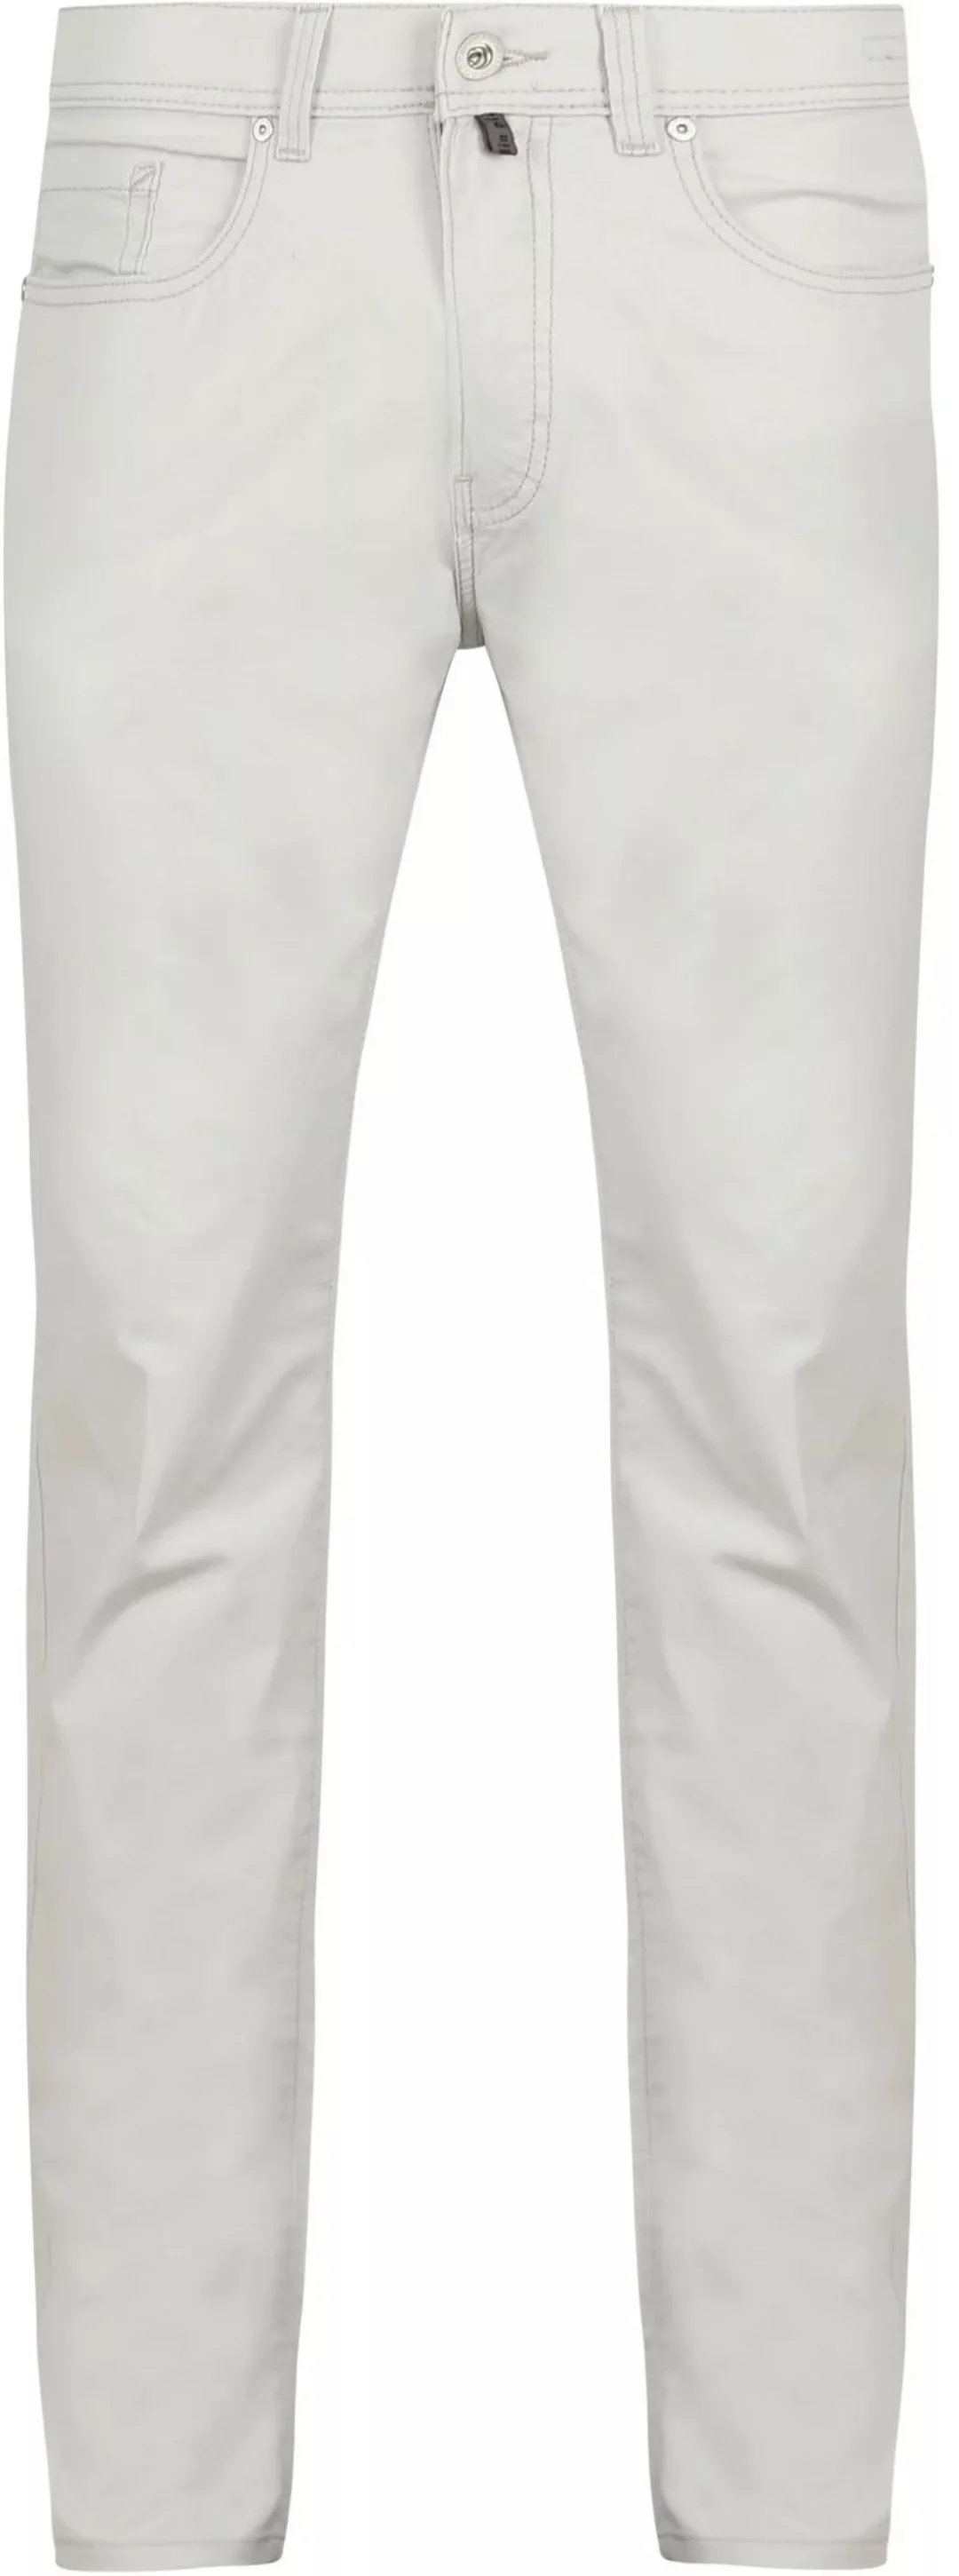 Pierre Cardin Trousers Lyon Tapered Hellgrau - Größe W 34 - L 30 günstig online kaufen